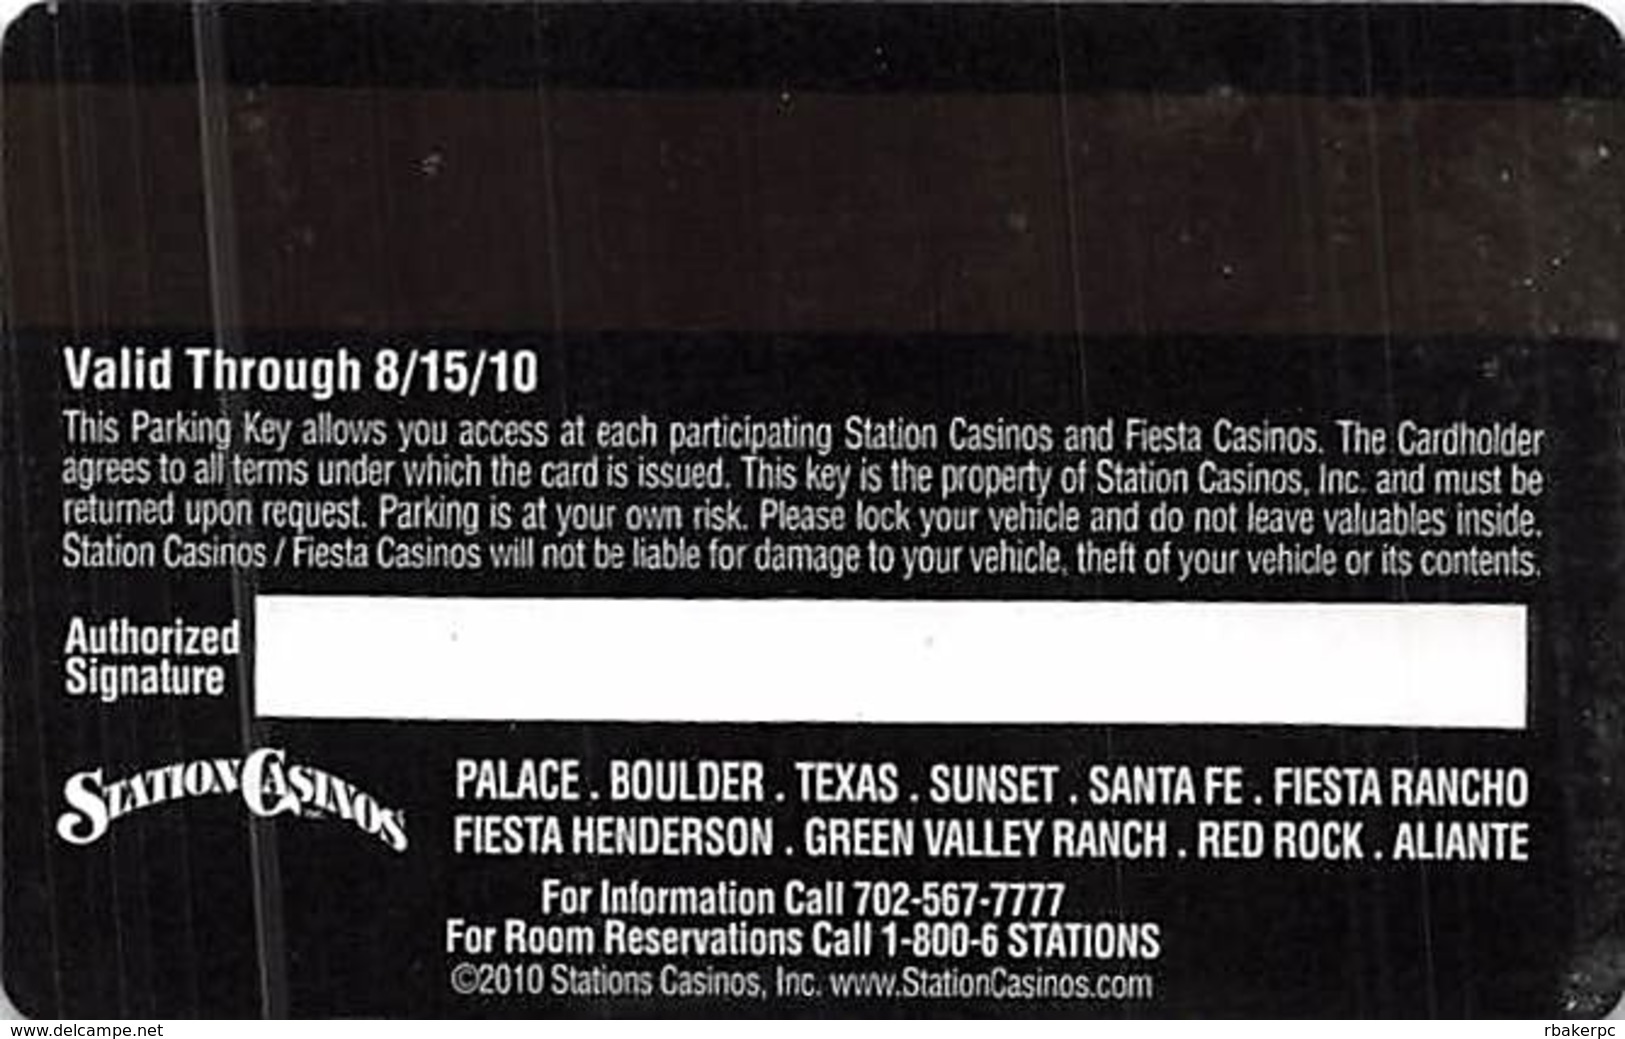 Station Casinos Las Vegas, NV - VIP Parking Card - Copyright 2010 - Exp 8/15/10 - Casino Cards